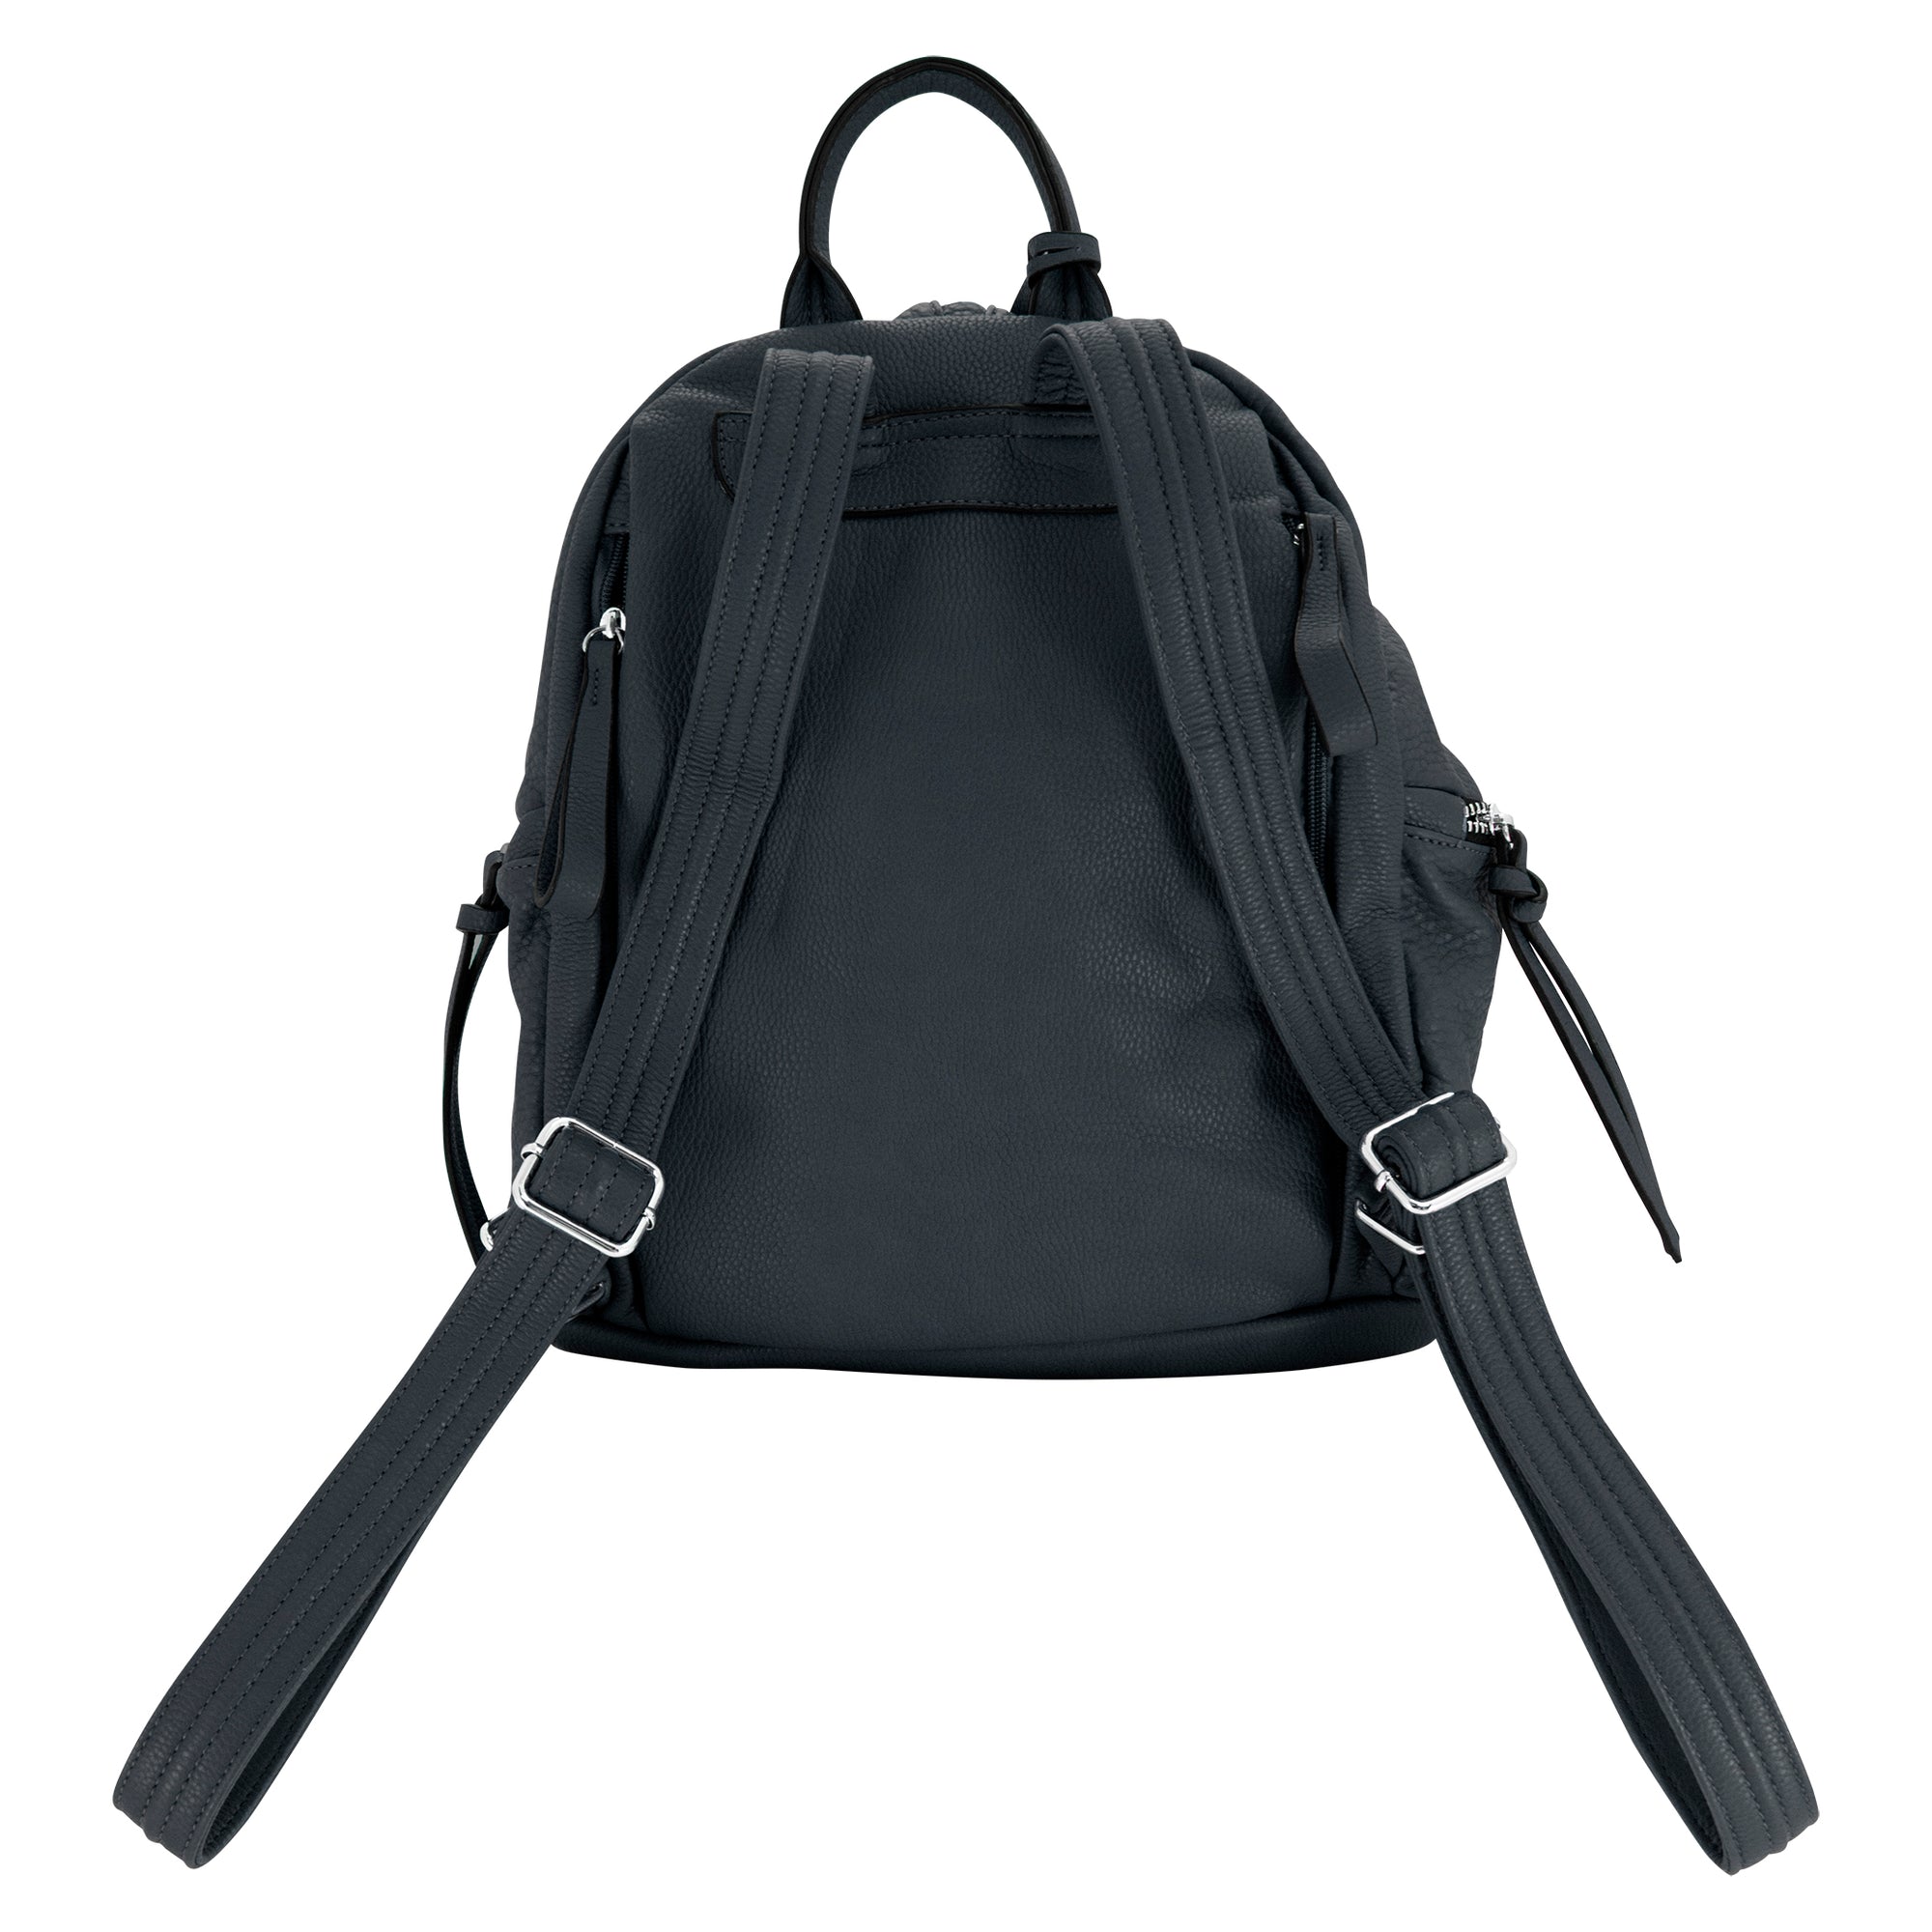 Concealed-Carry Backpack | Aurora Backpack | GunGoddess - GunGoddess.com